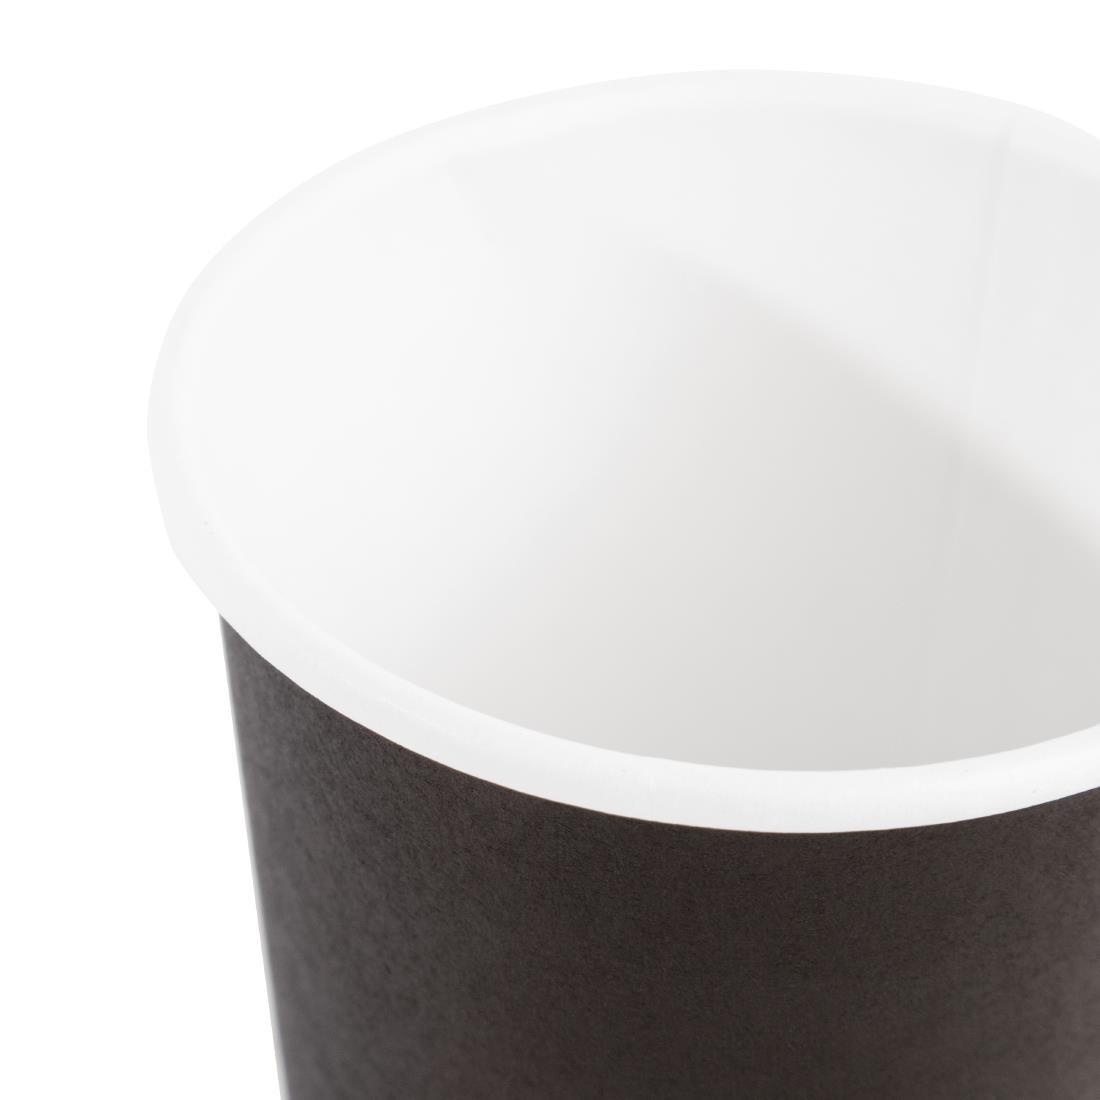 Fiesta Recyclable Espresso Cups Single Wall Black 112ml / 4oz (Pack of 1000) - GF018  - 4